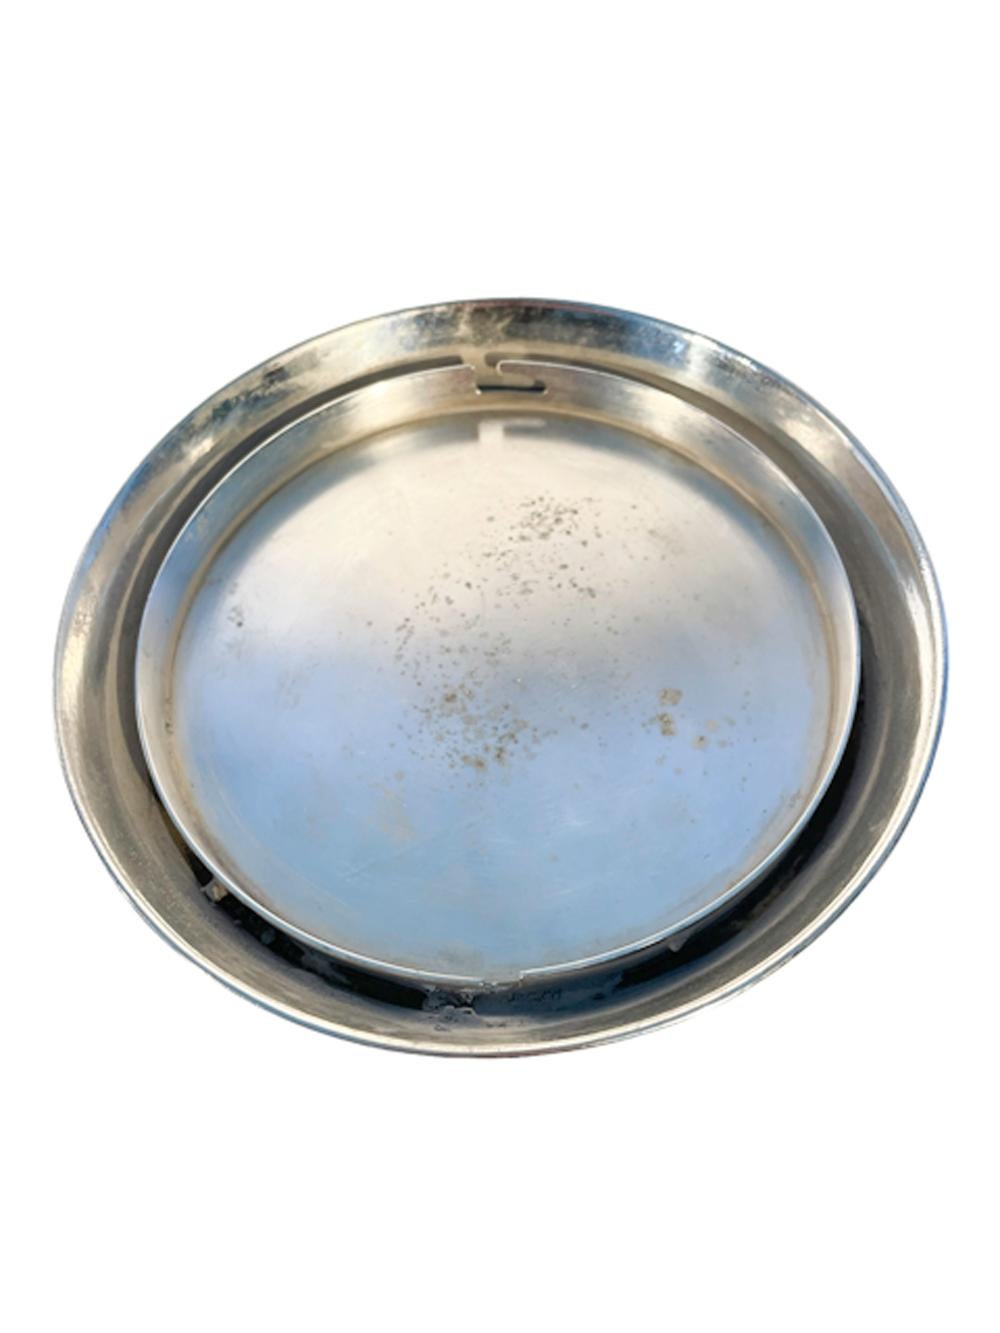 Unusual Art Deco Silver Plate Ice Bucket W/Ice Drain & Detachable Saucer For Sale 2